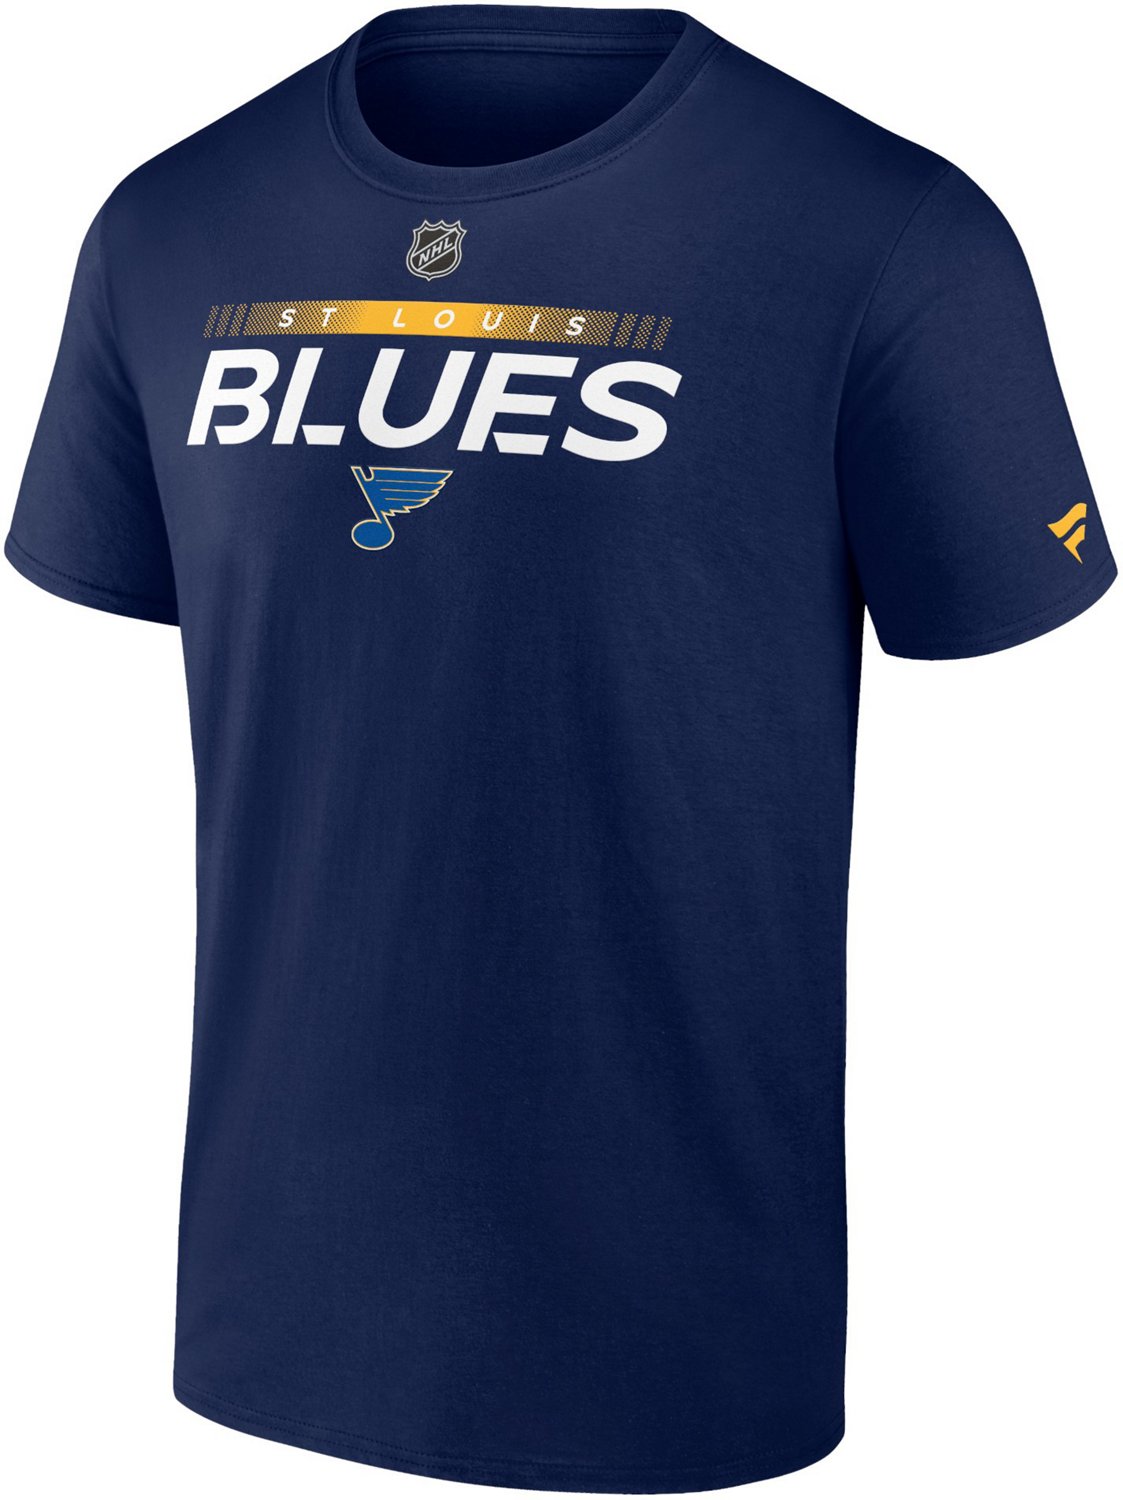 St. Louis Blues Clothing